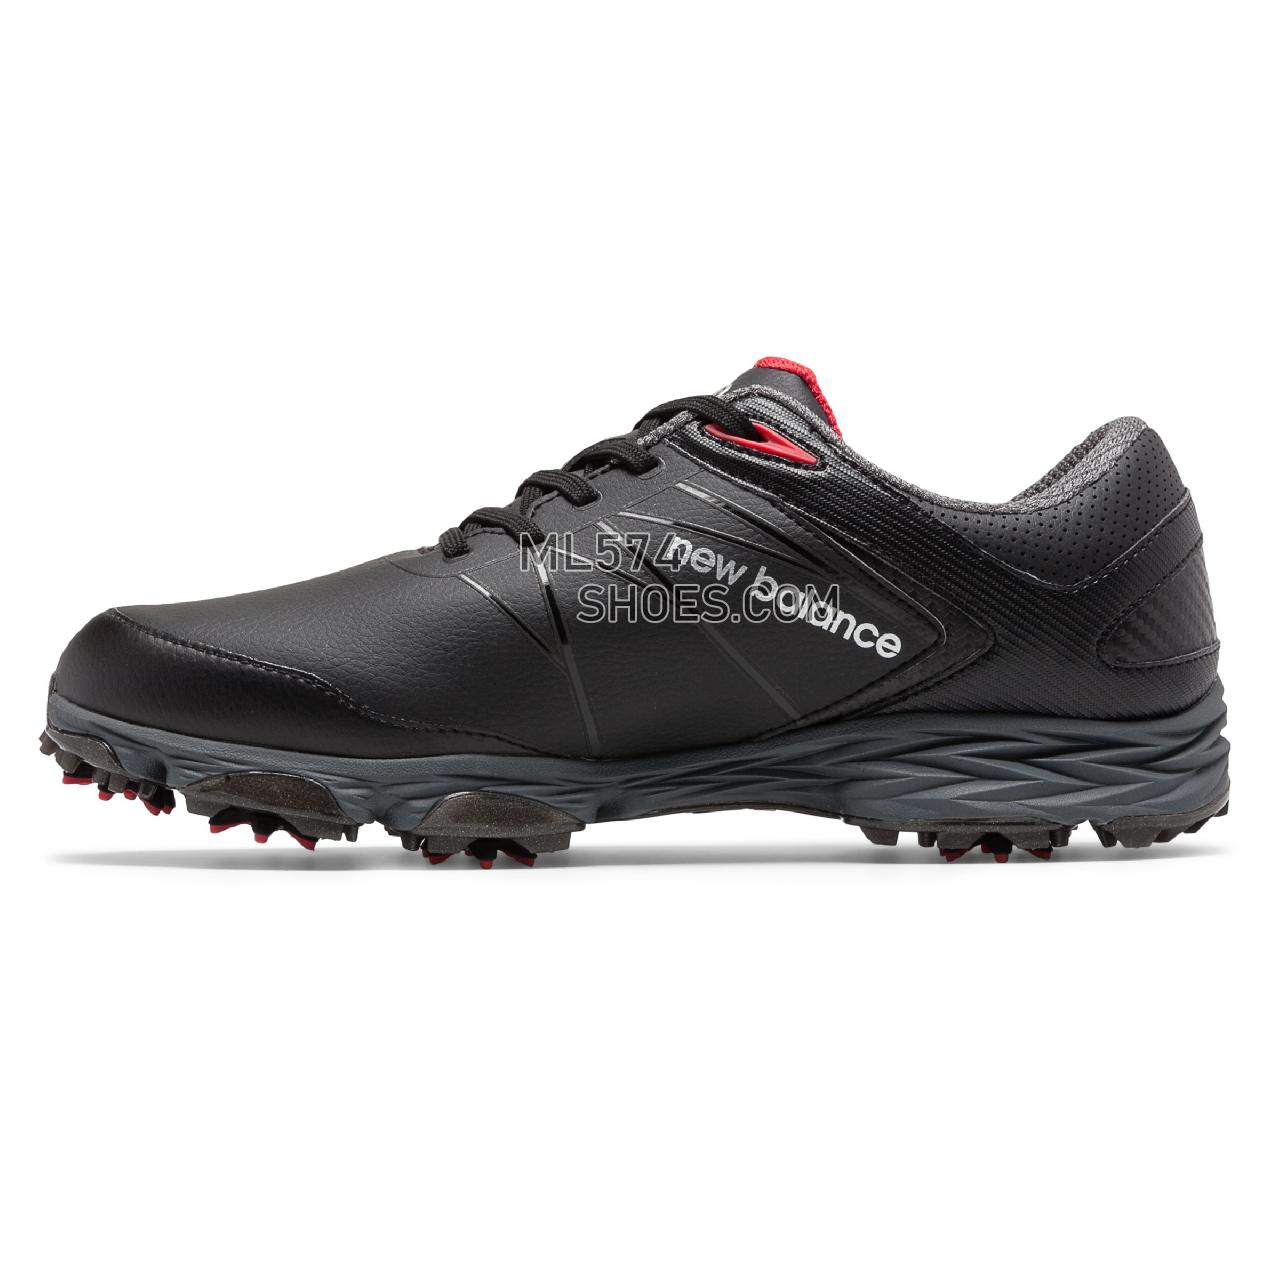 New Balance Striker - Men's Golf - Black with Red - NBG2005BR